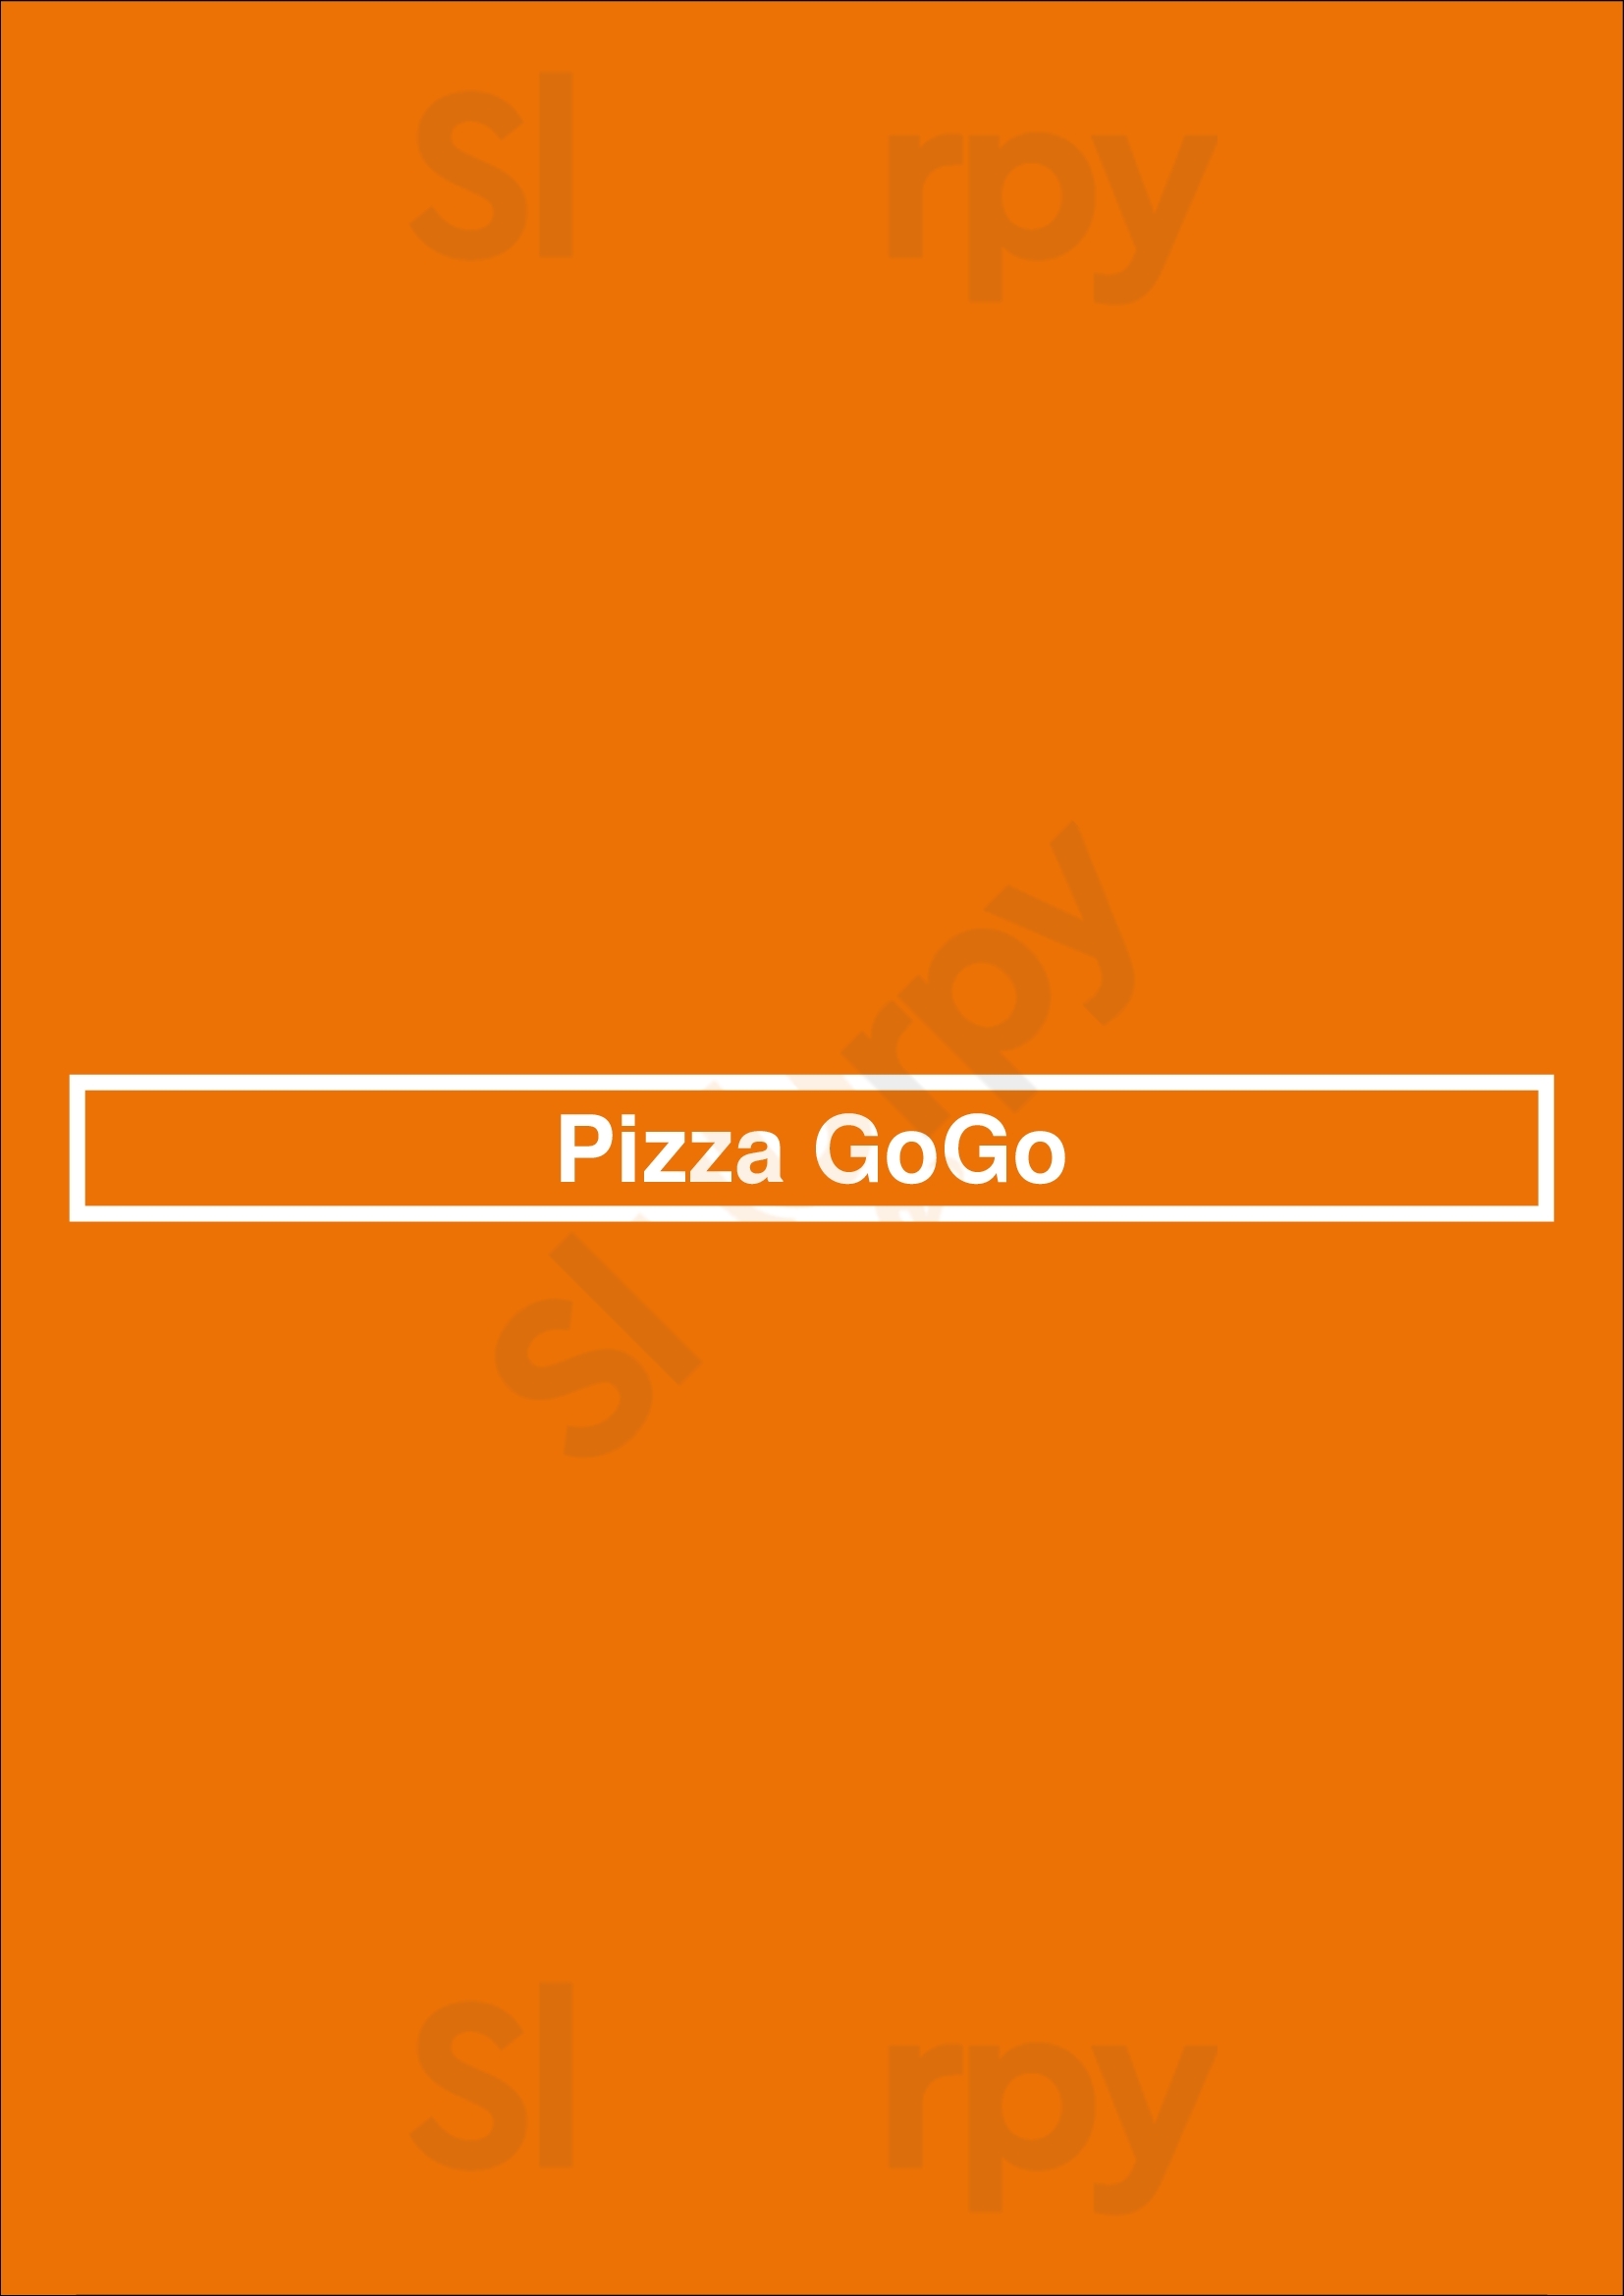 Pizza Gogo Poole Menu - 1